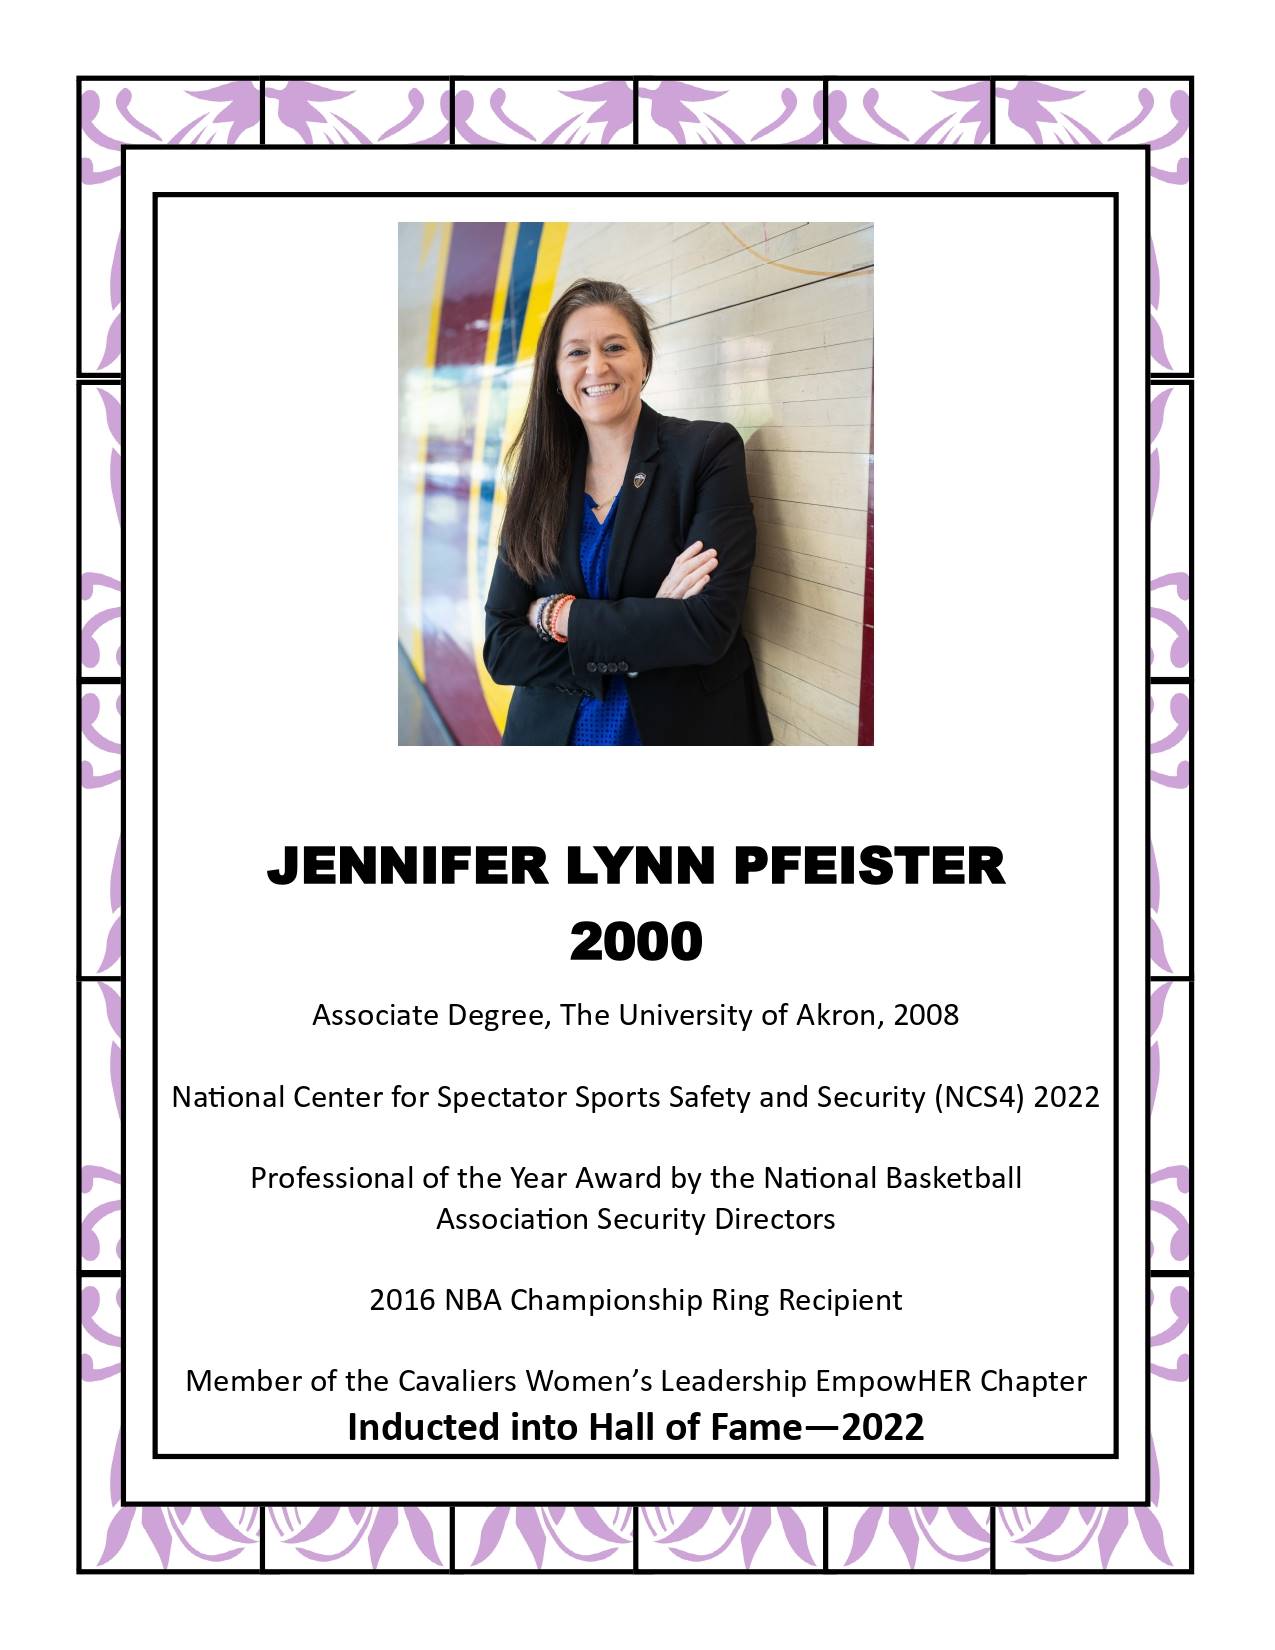 Jennifer Lynn Pfeister